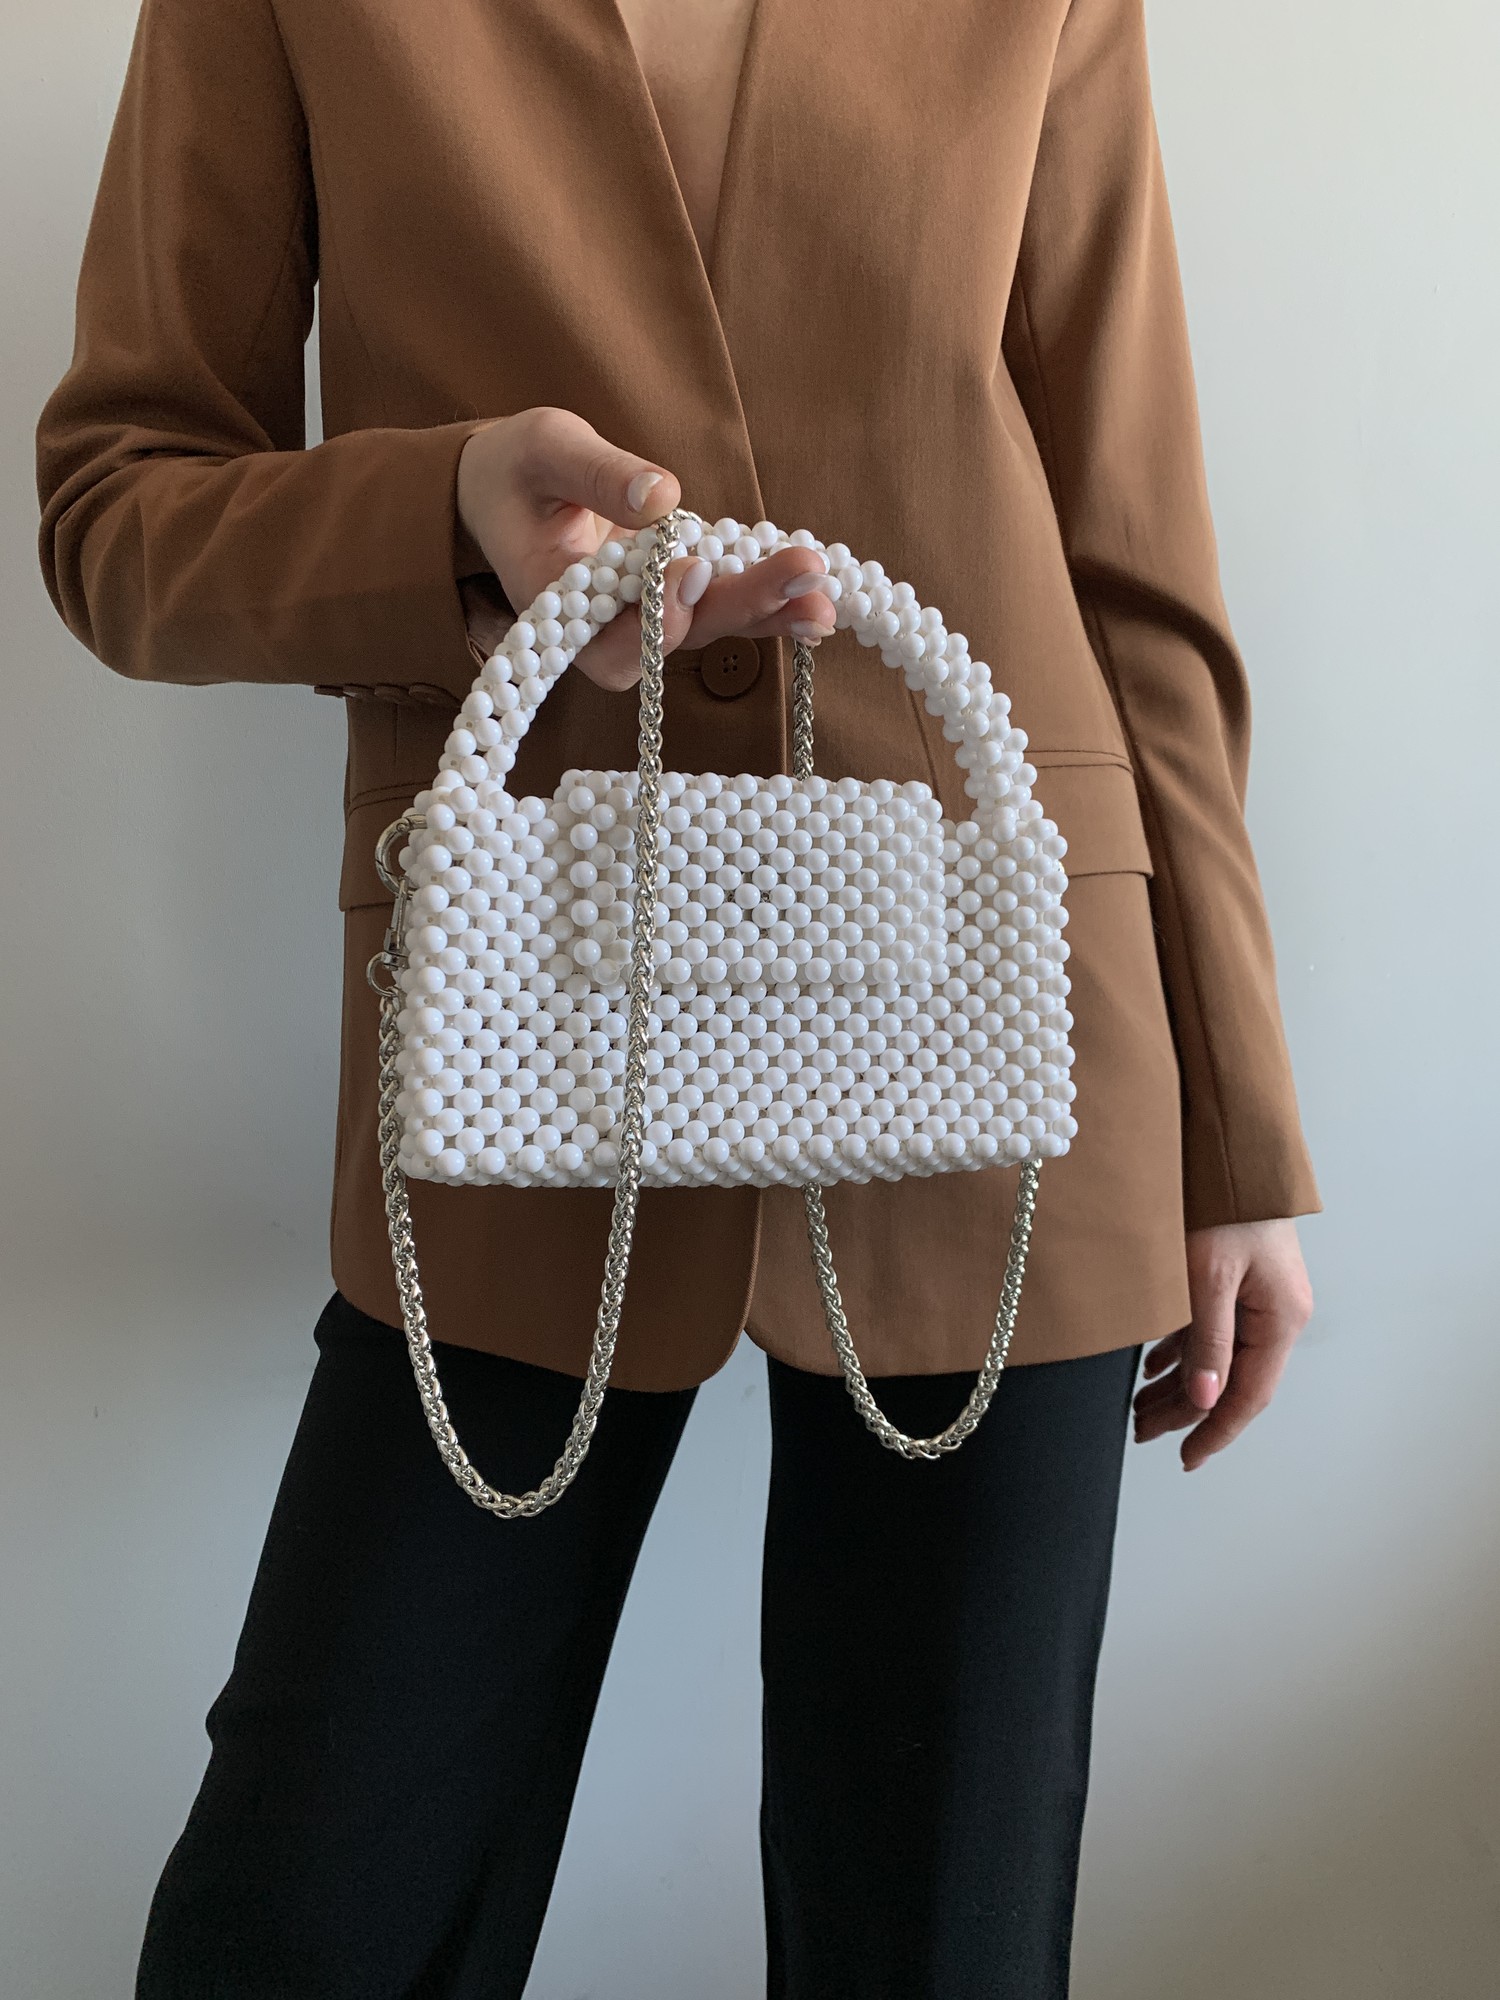 Basic white bag with beads